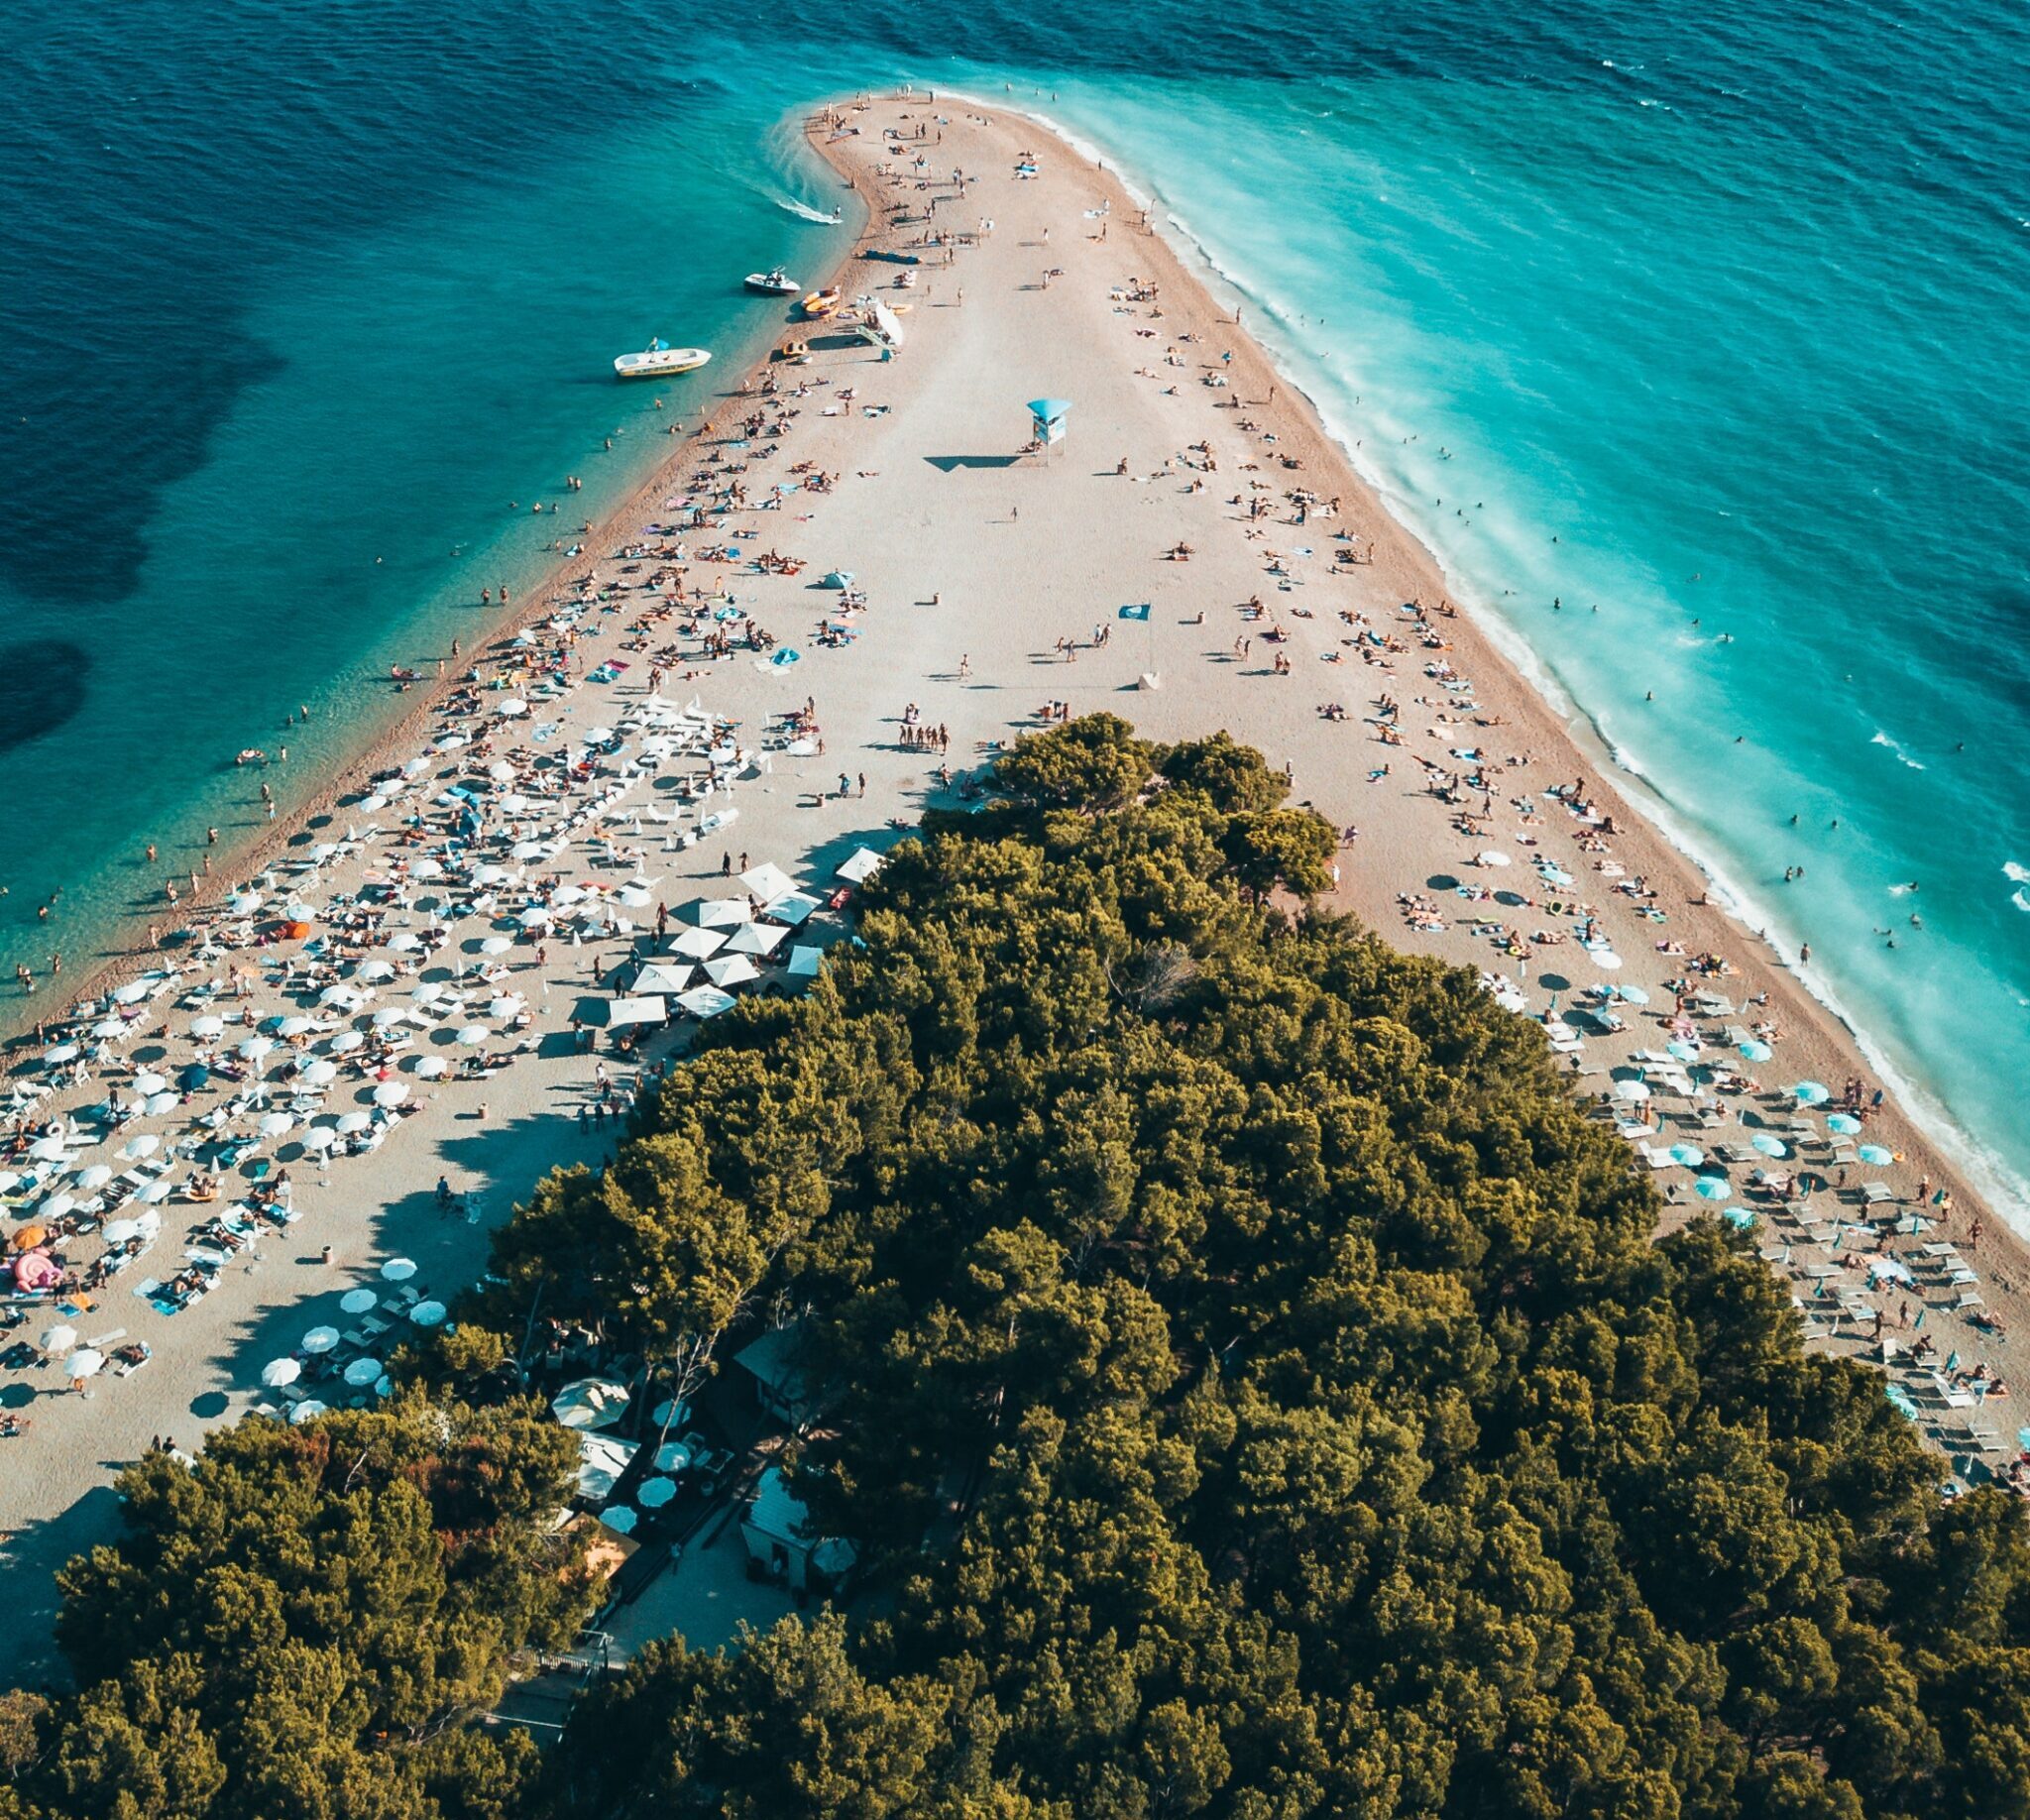 A beach at a turquoise sea